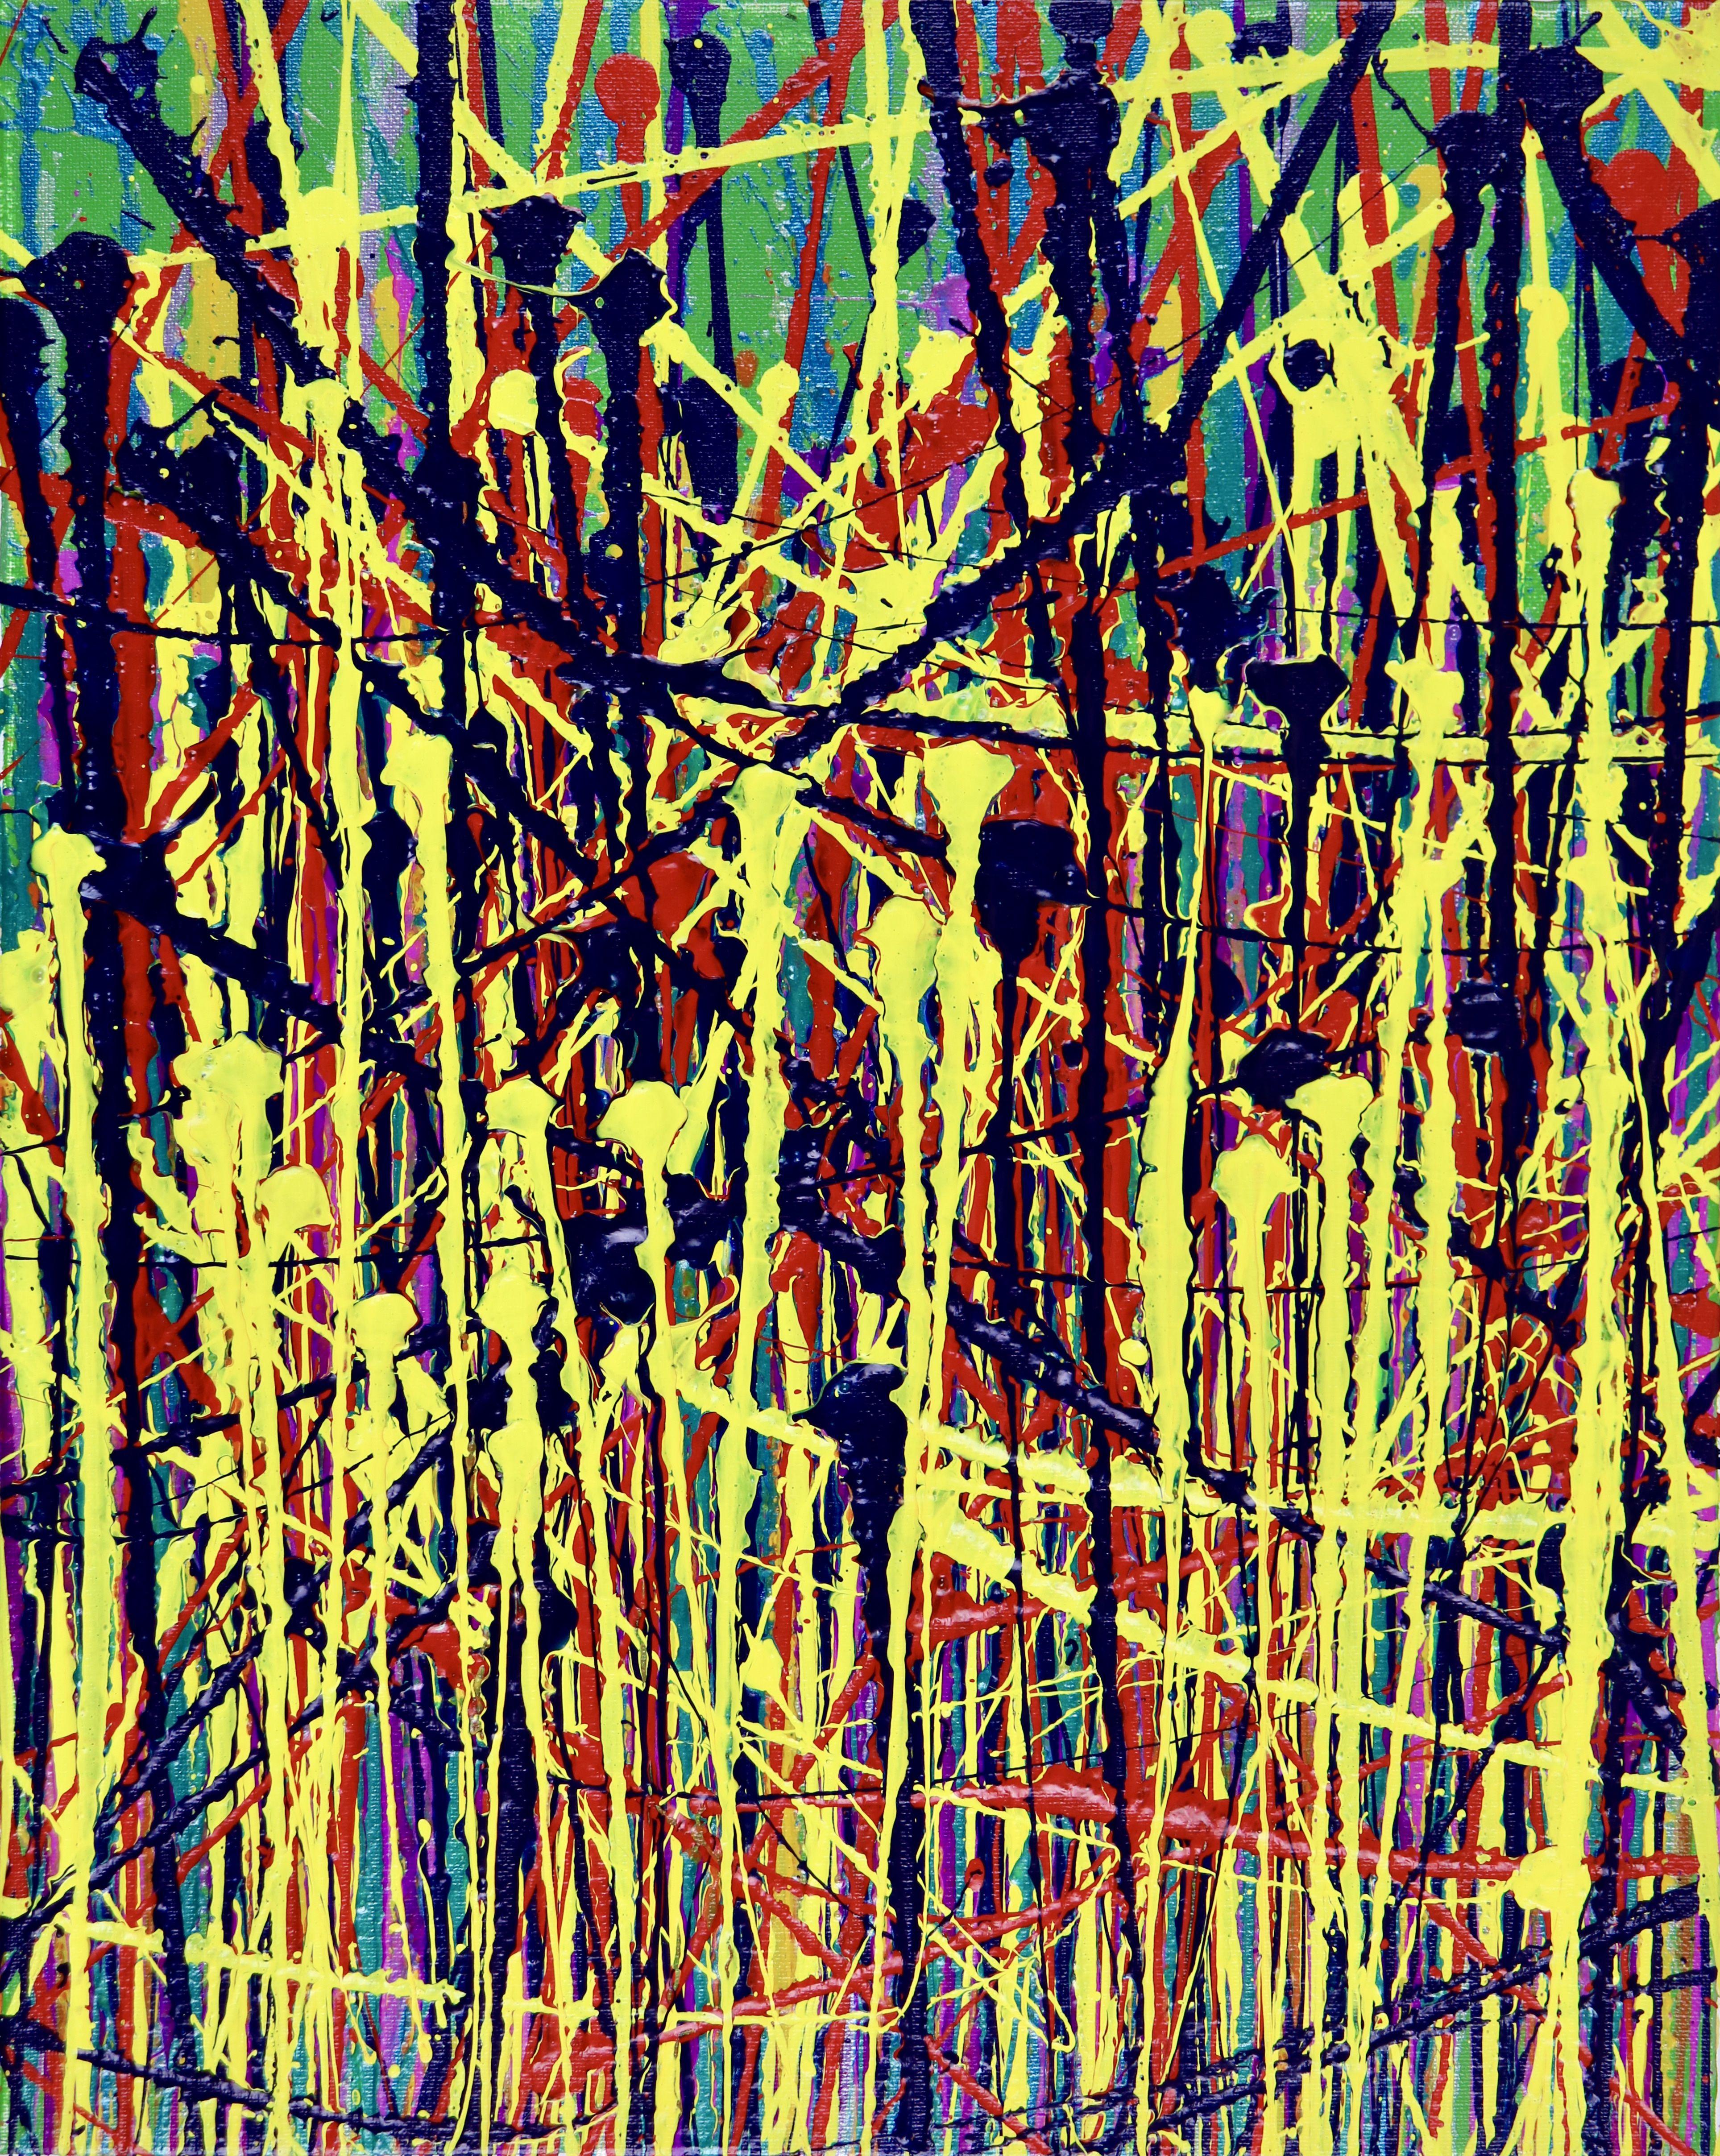 Daydream (Chaos Garden) 2, Painting, Acrylic on Canvas 2